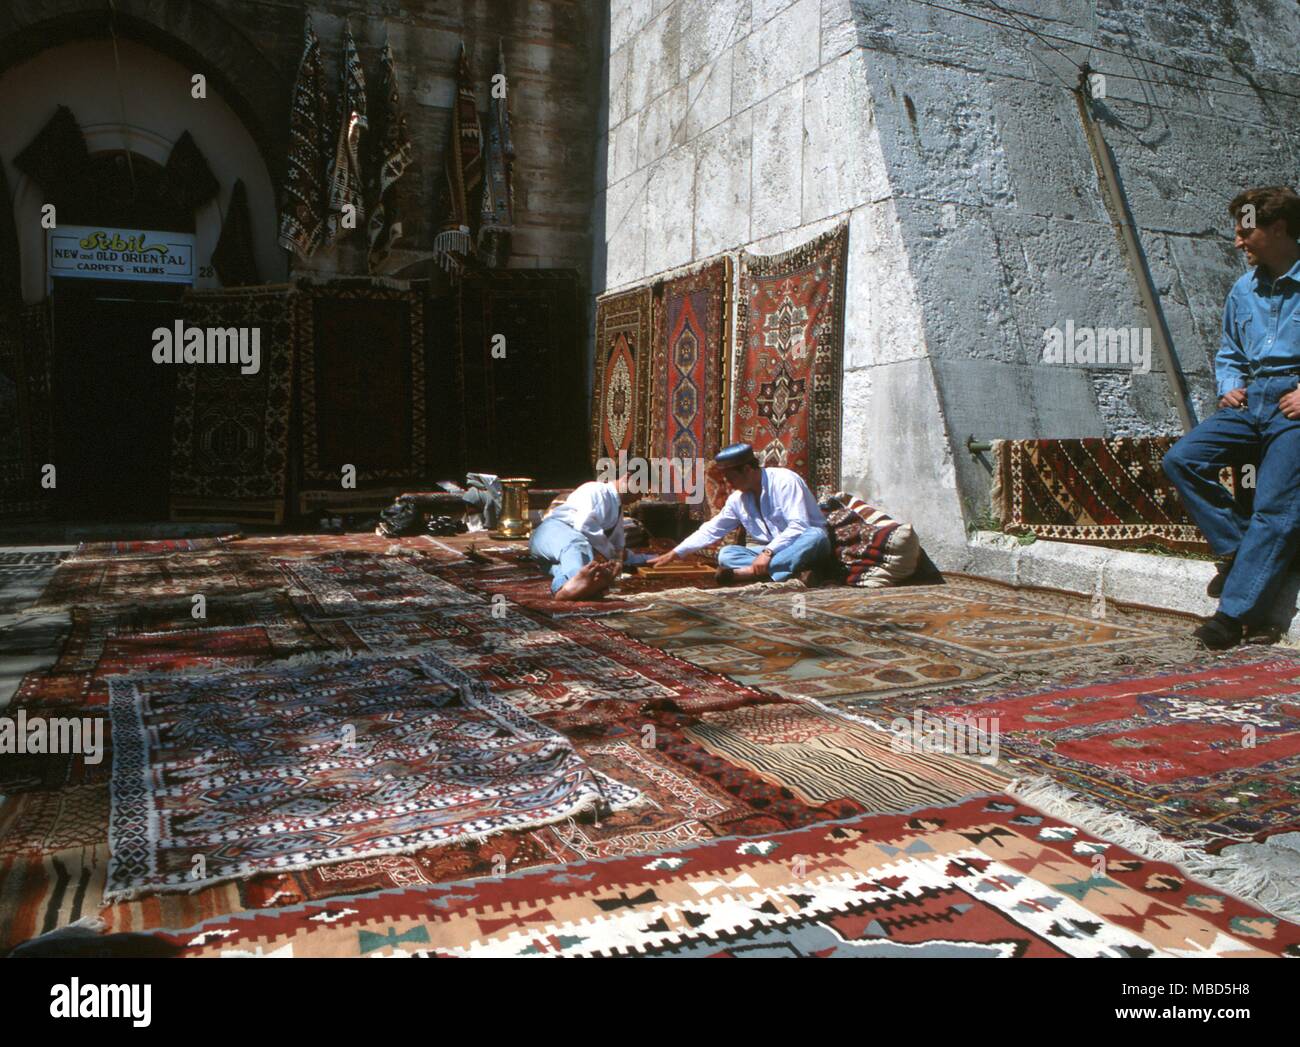 Teppich Verkäufer in Istanbul. Türkei Stockfoto